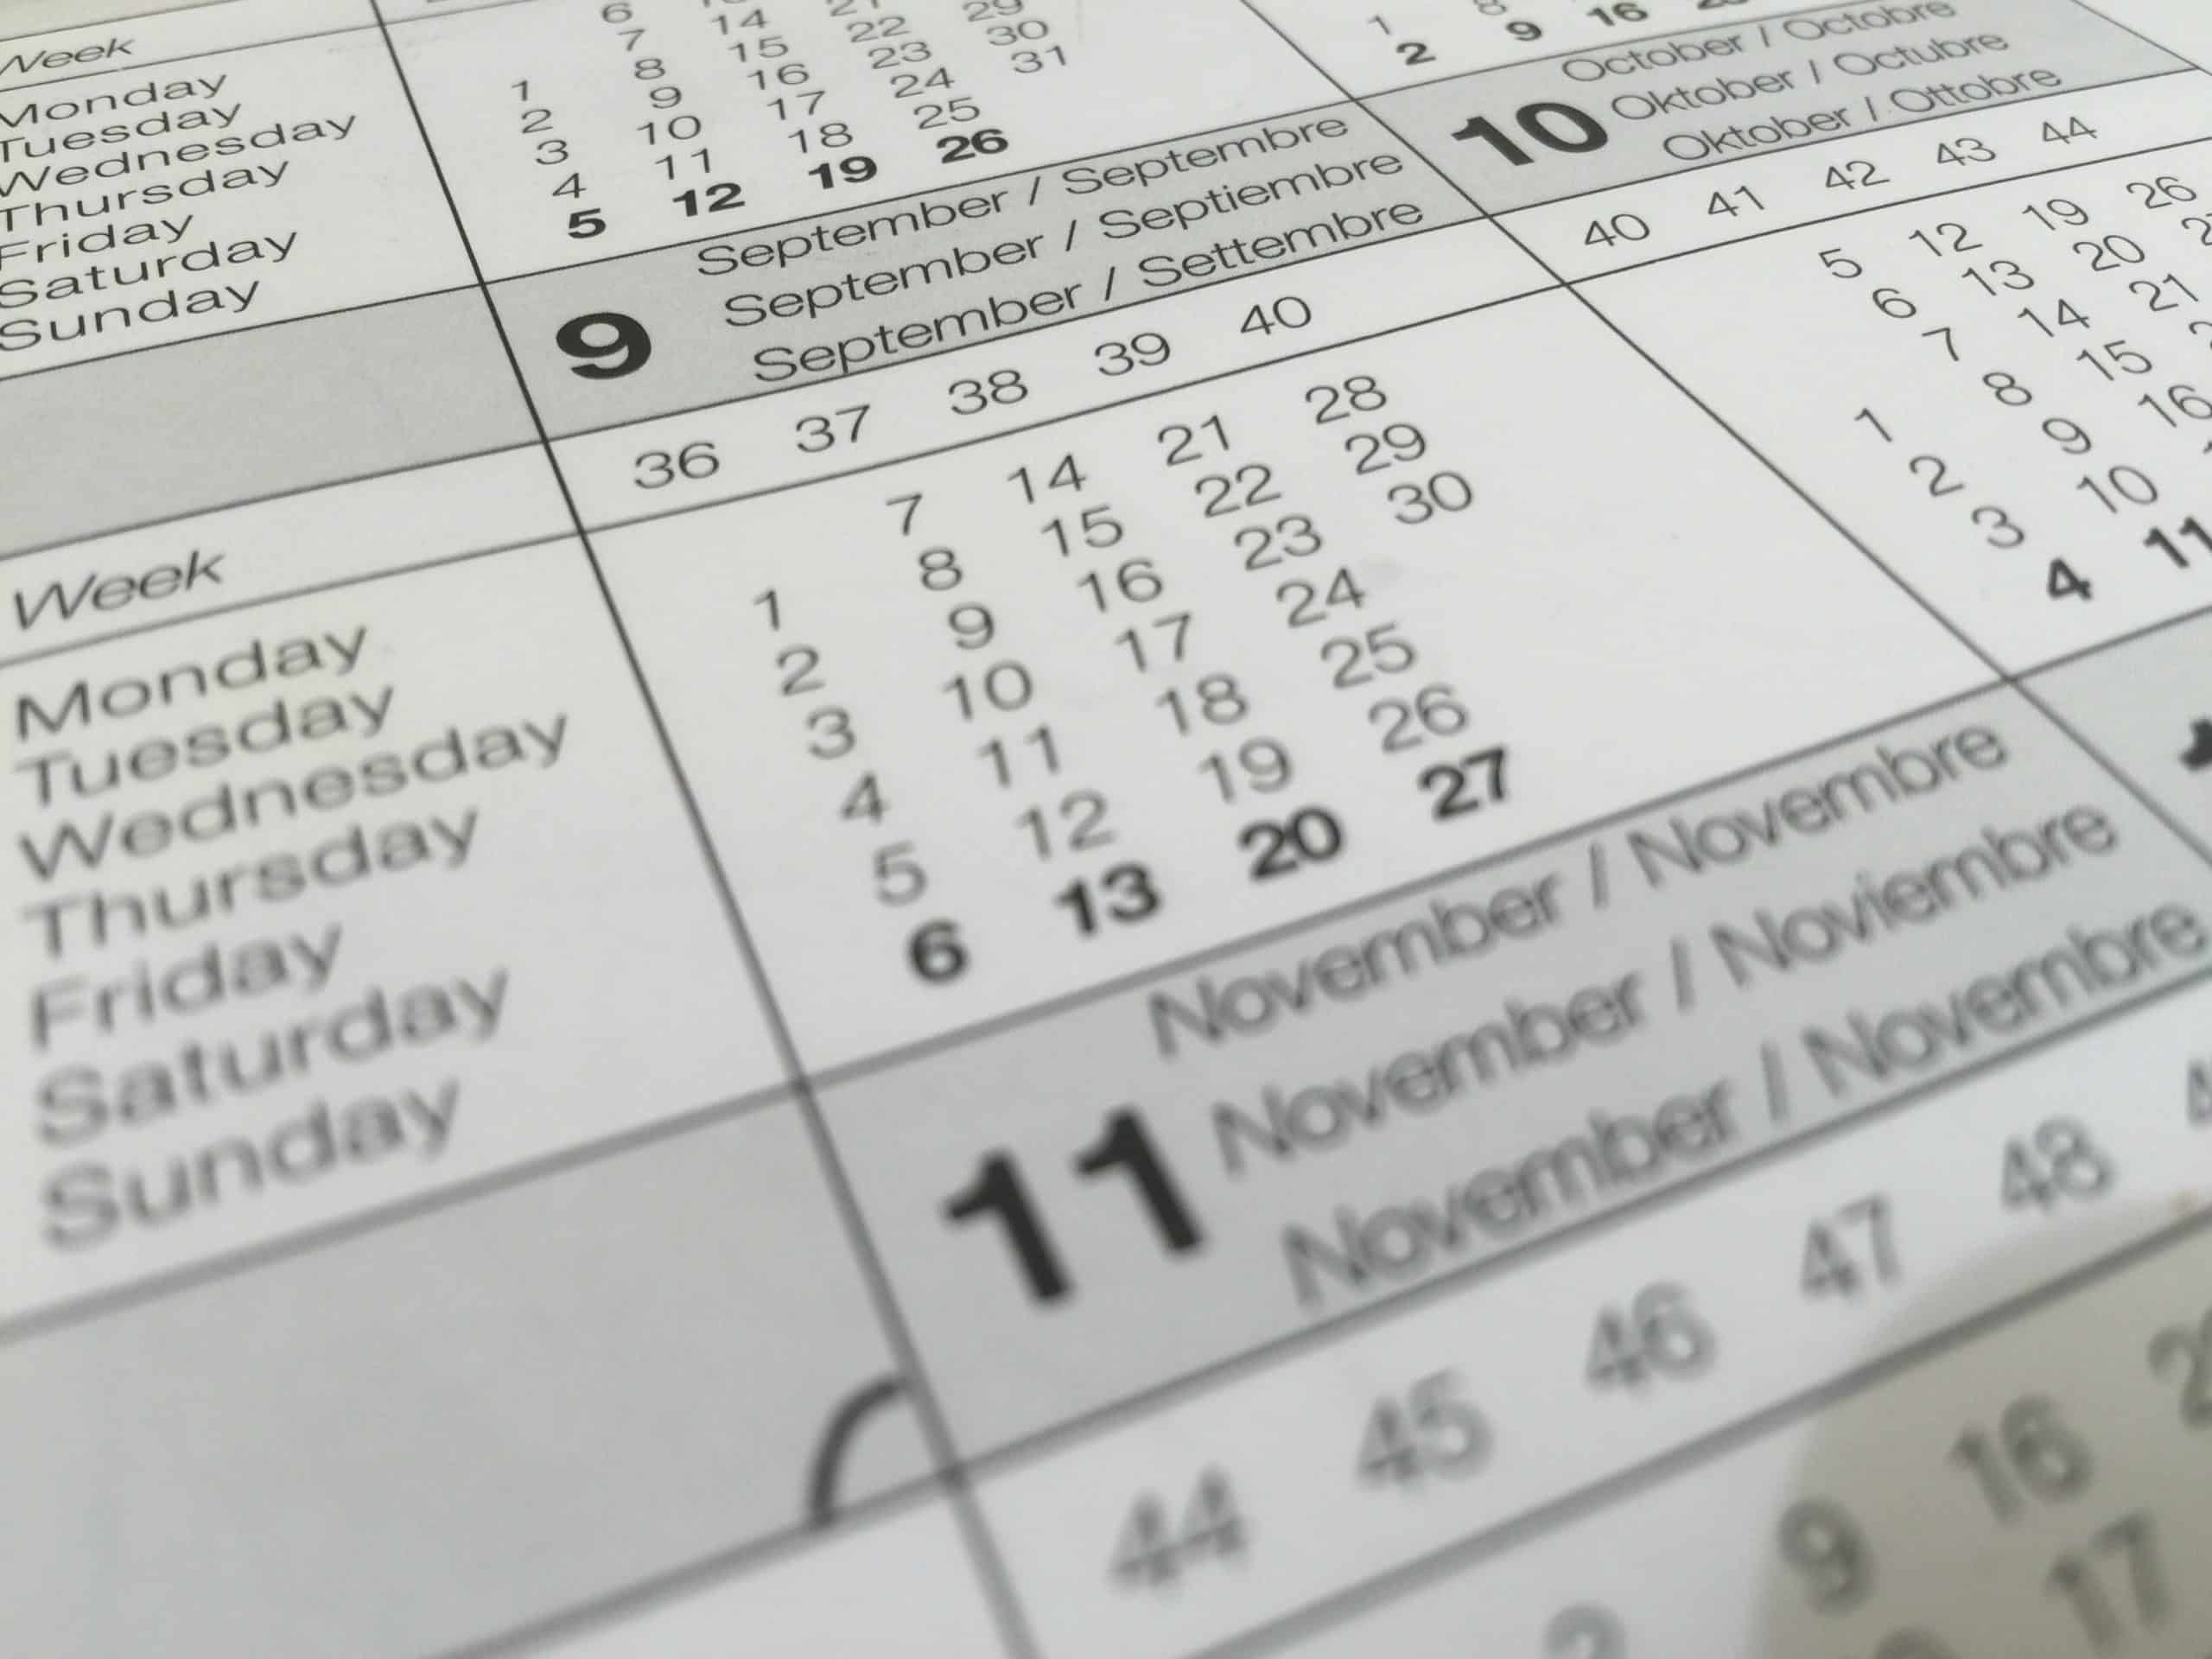 decorative image showing a close up of a calendar schedule